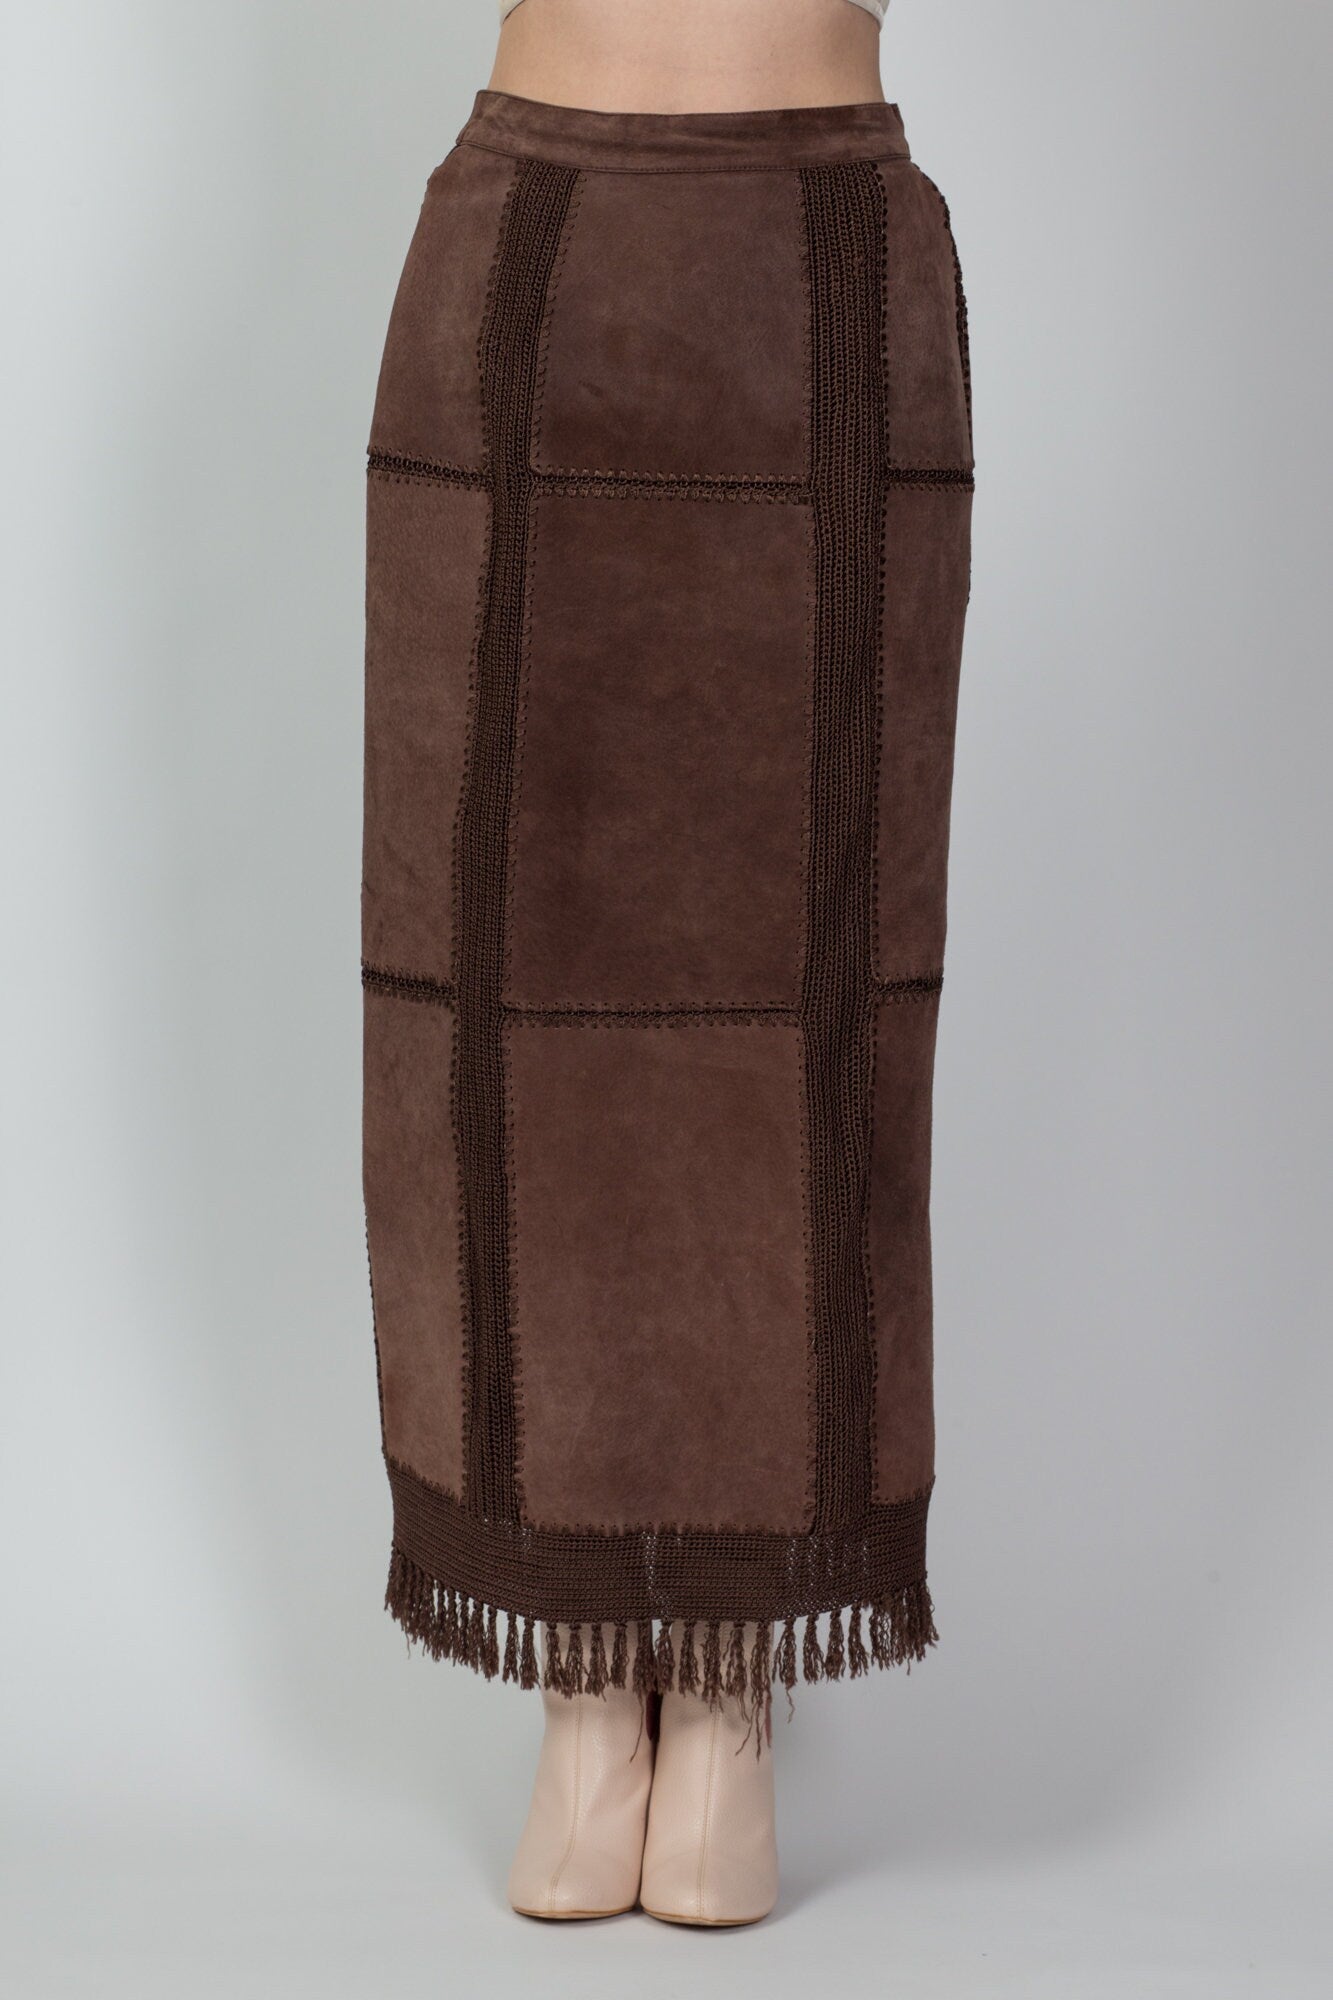 90s Suede Crochet Patchwork Maxi Skirt - Medium, 28.5" 